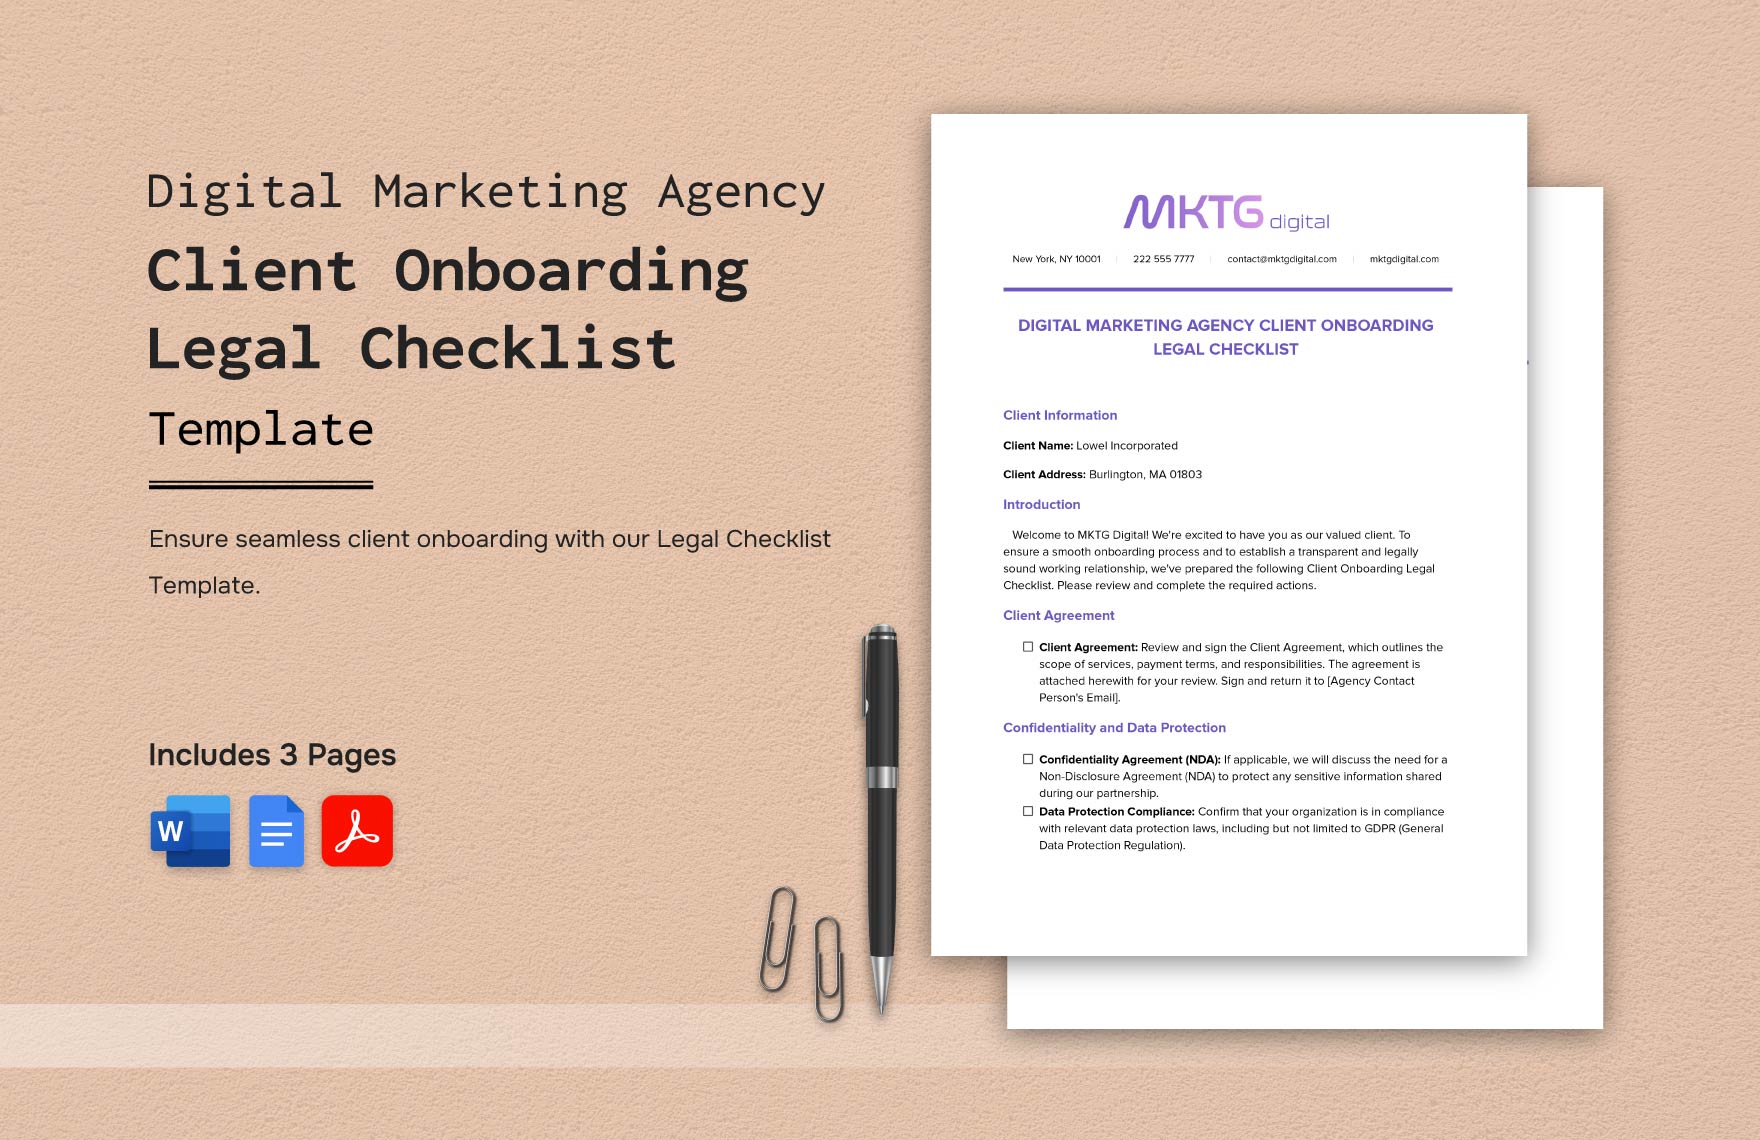 Digital Marketing Agency Client Onboarding Legal Checklist Template